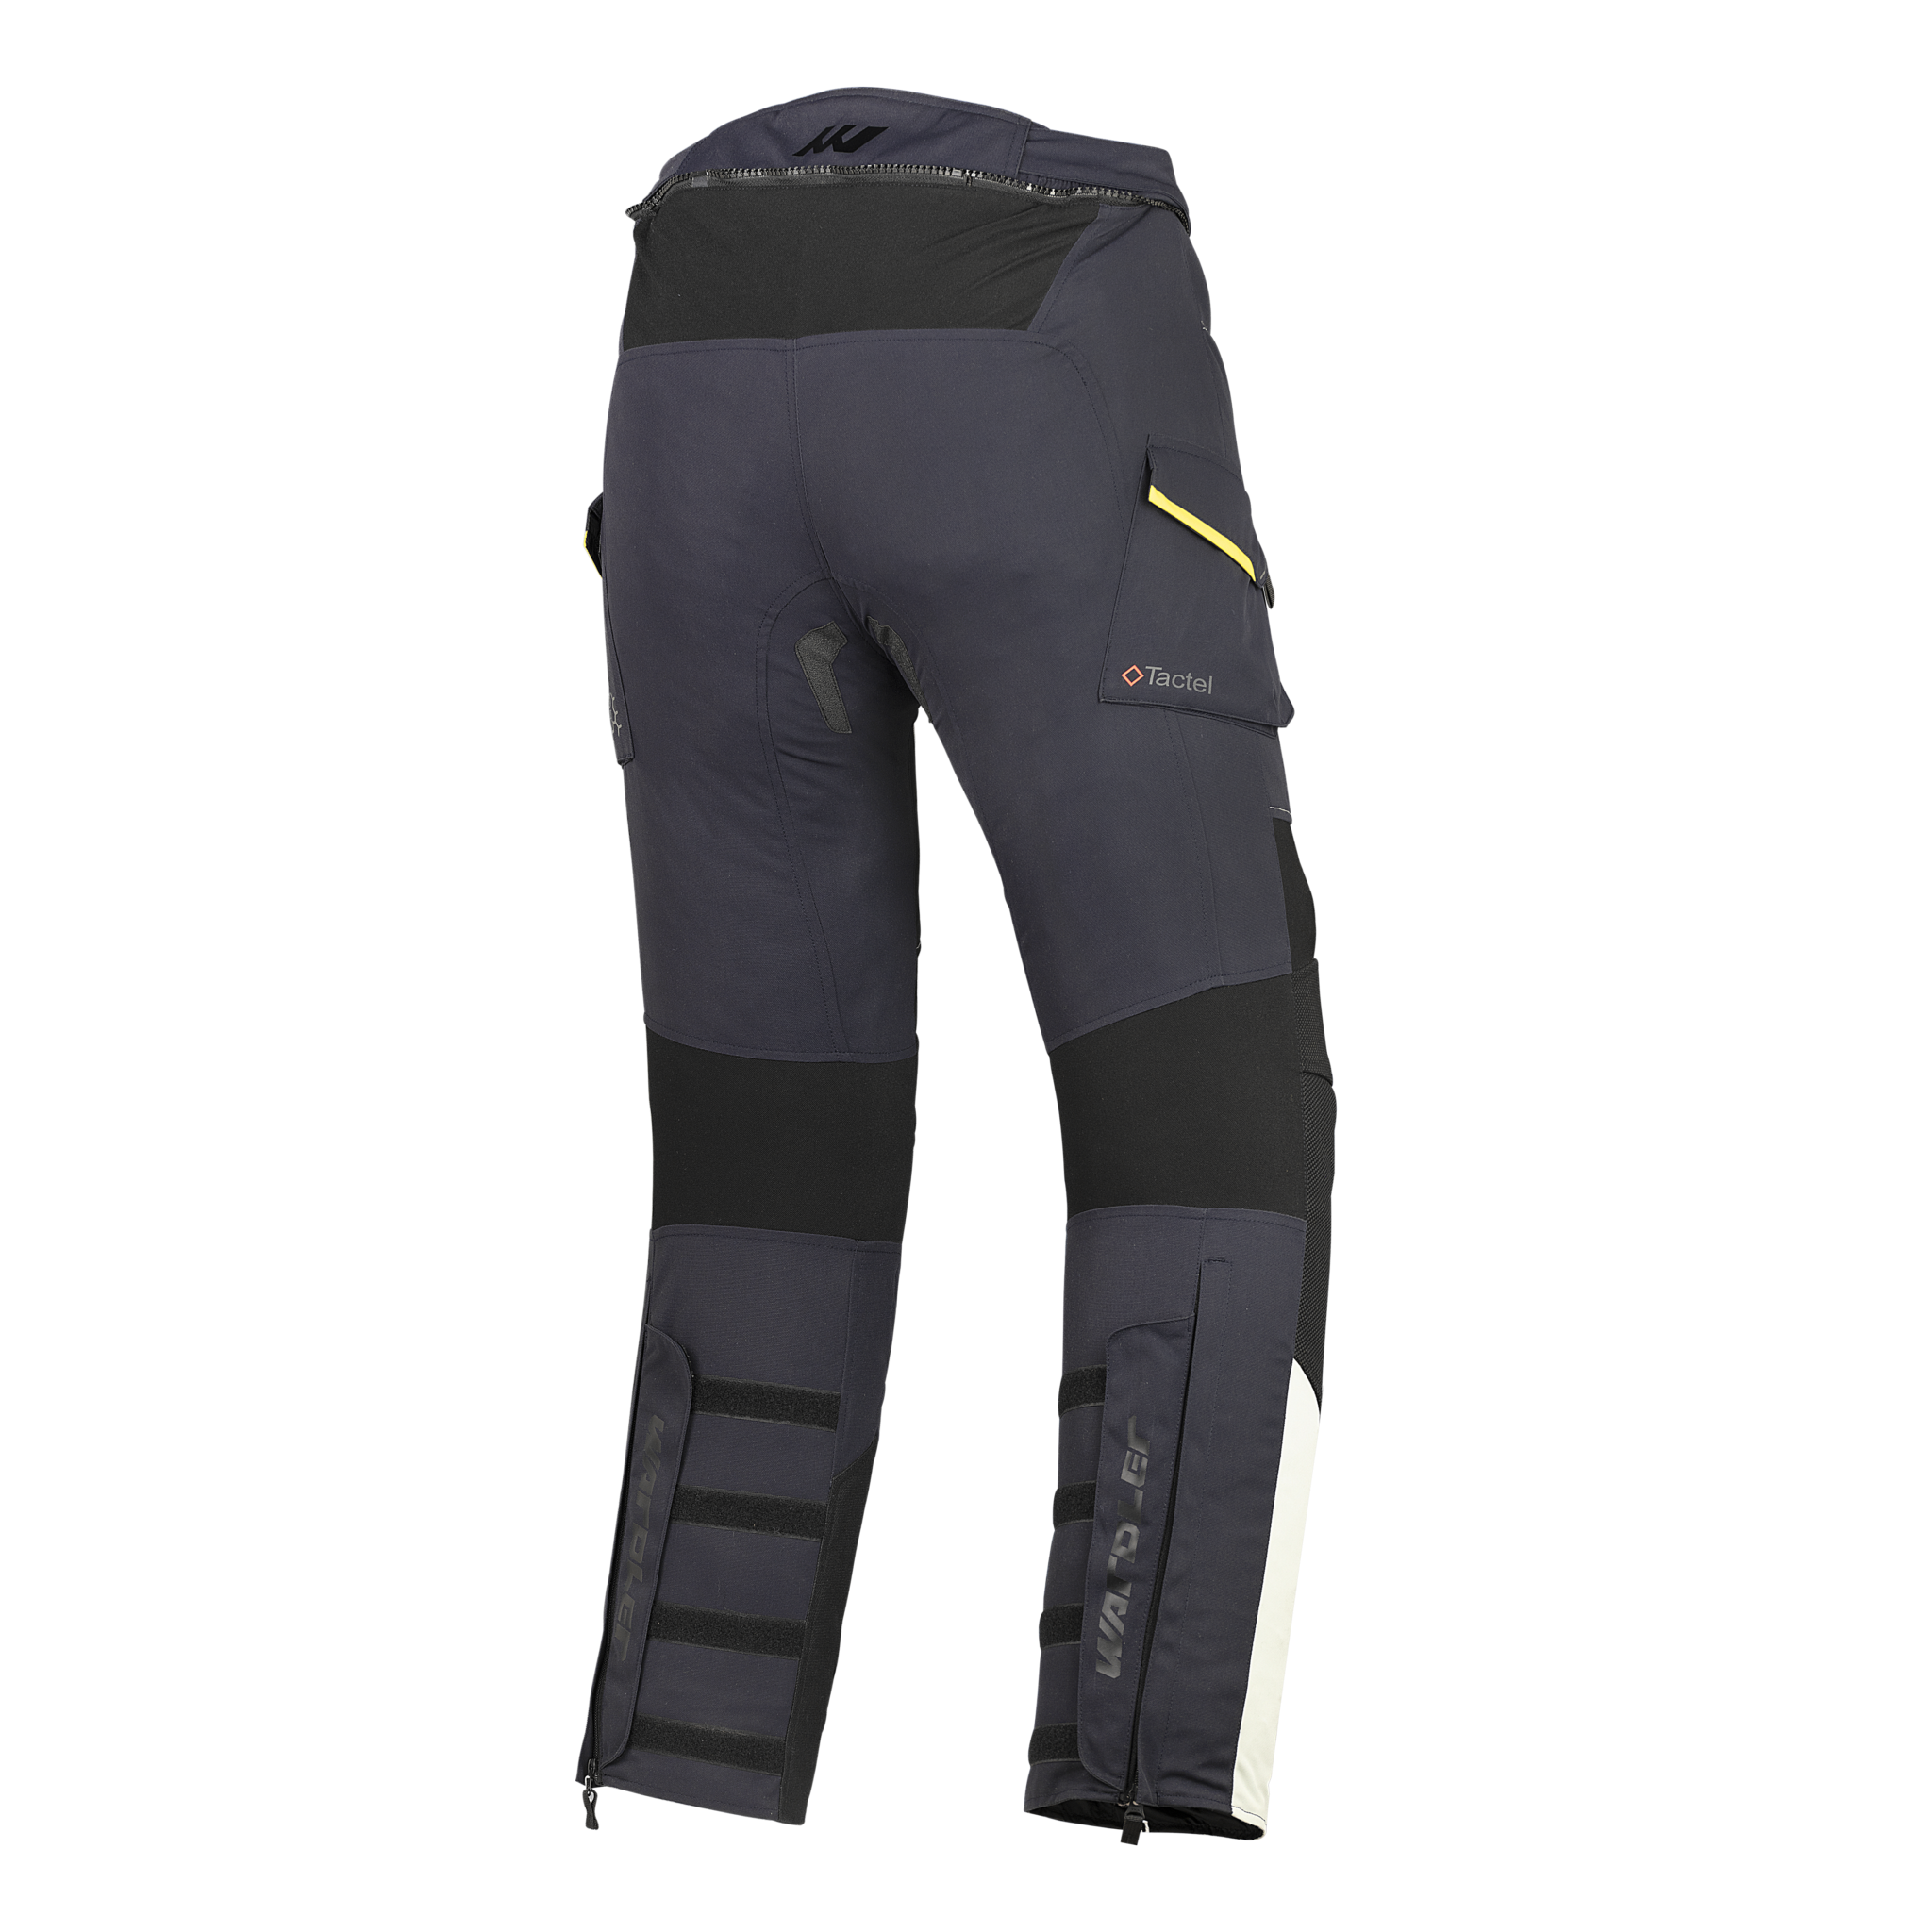 Wardler Atlas Textile Motorcycle Pants, Navy Blue - Ice Grey, Back View